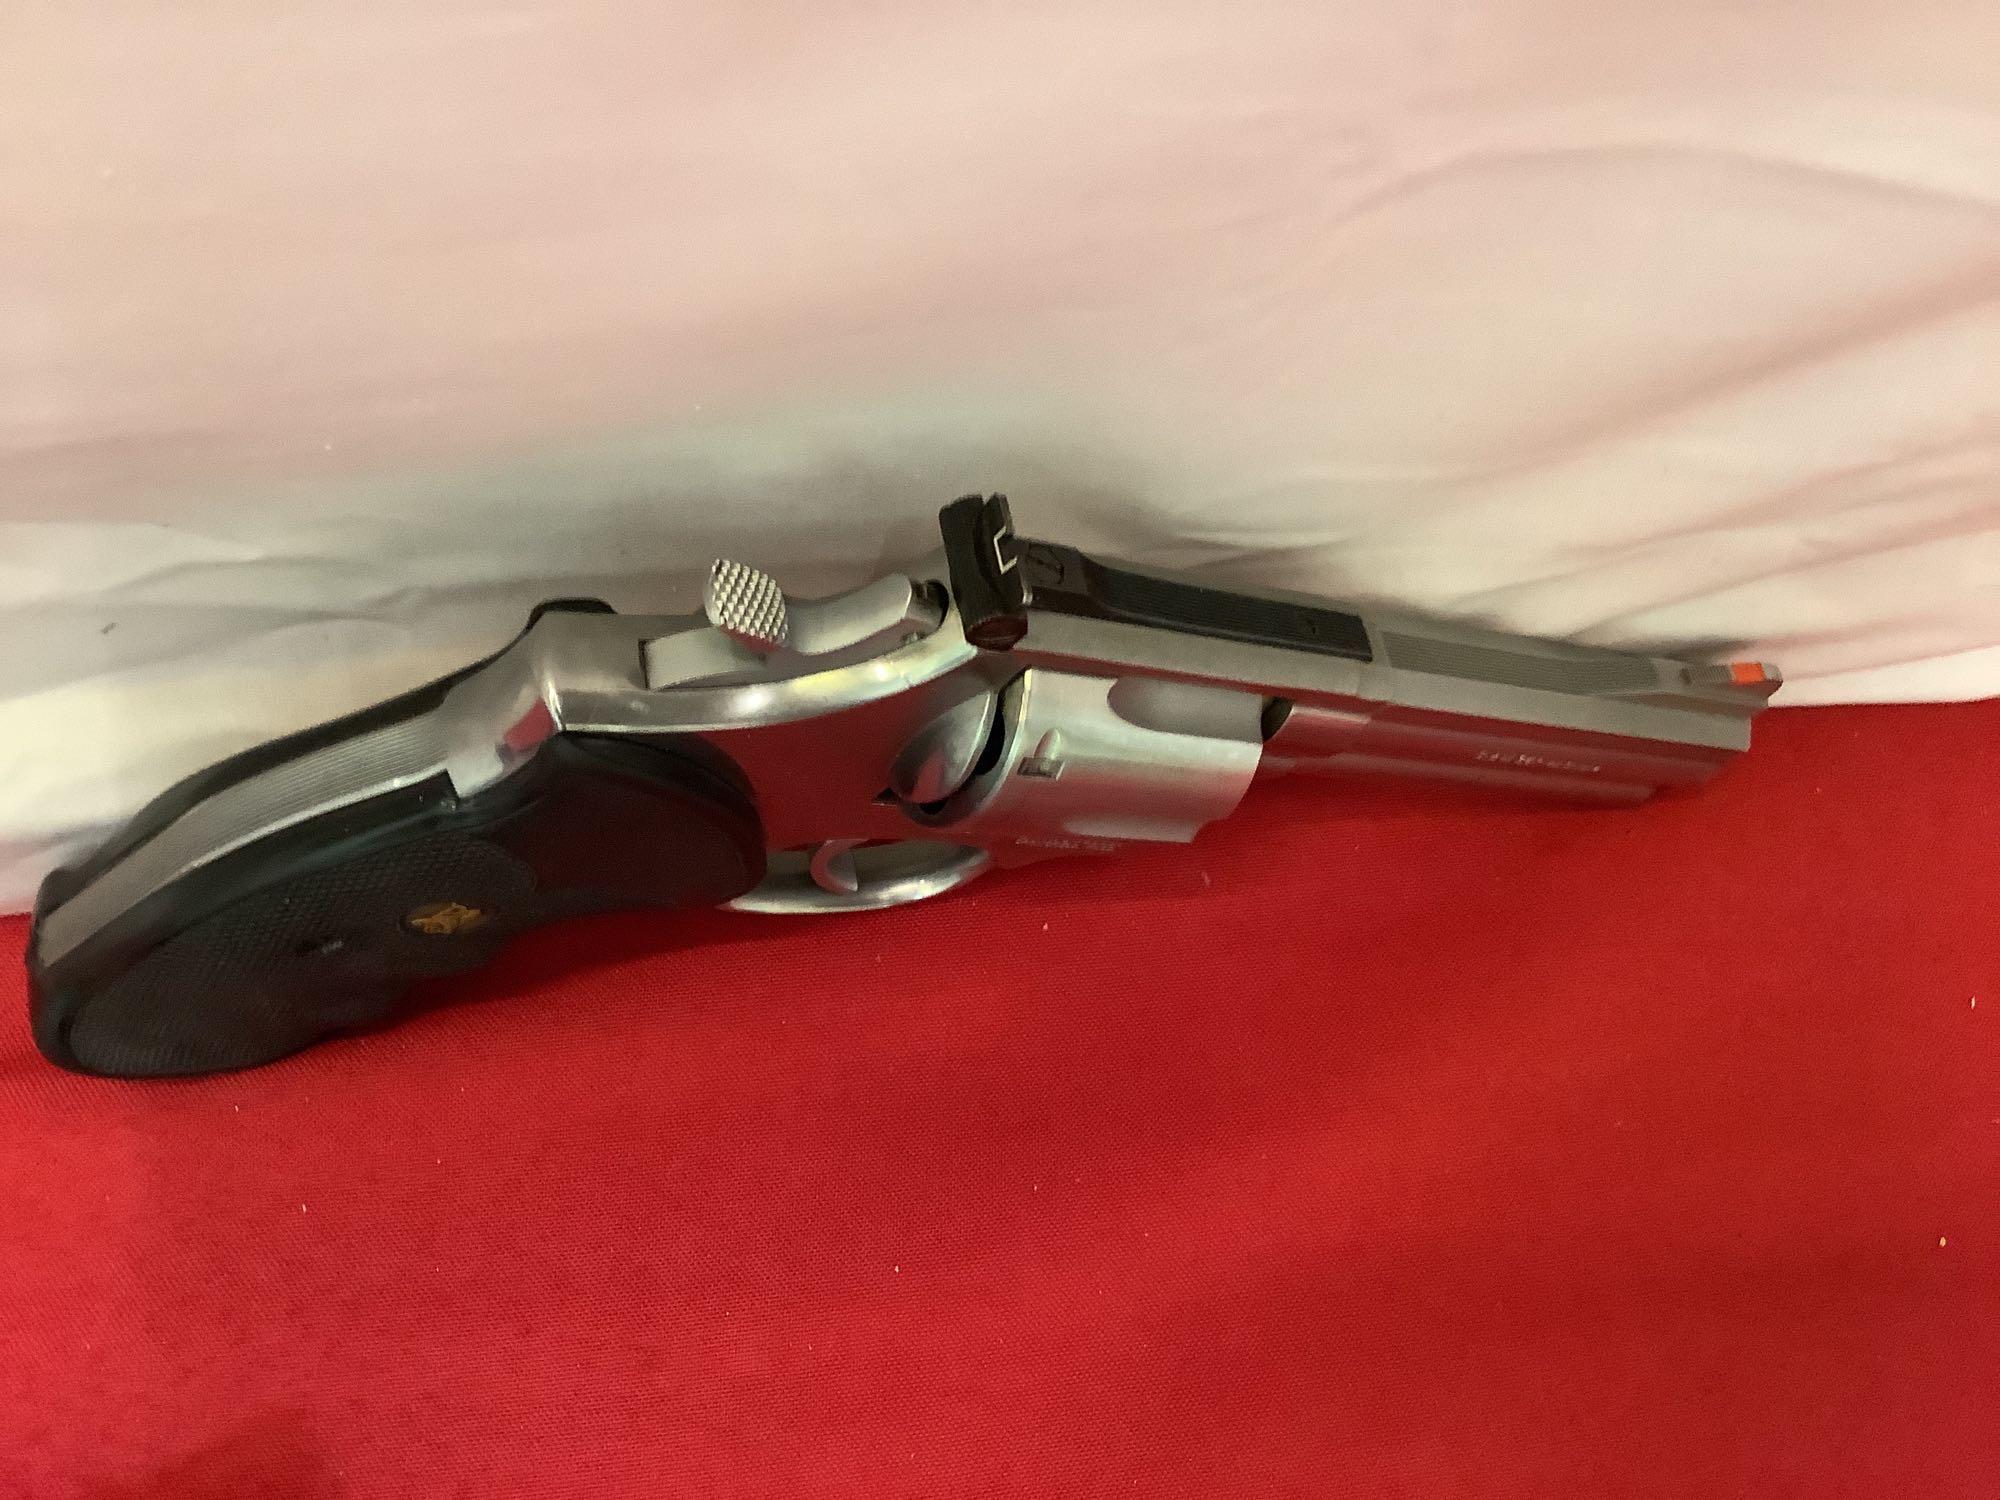 Smith & Wesson mod. 686-3 Revolver